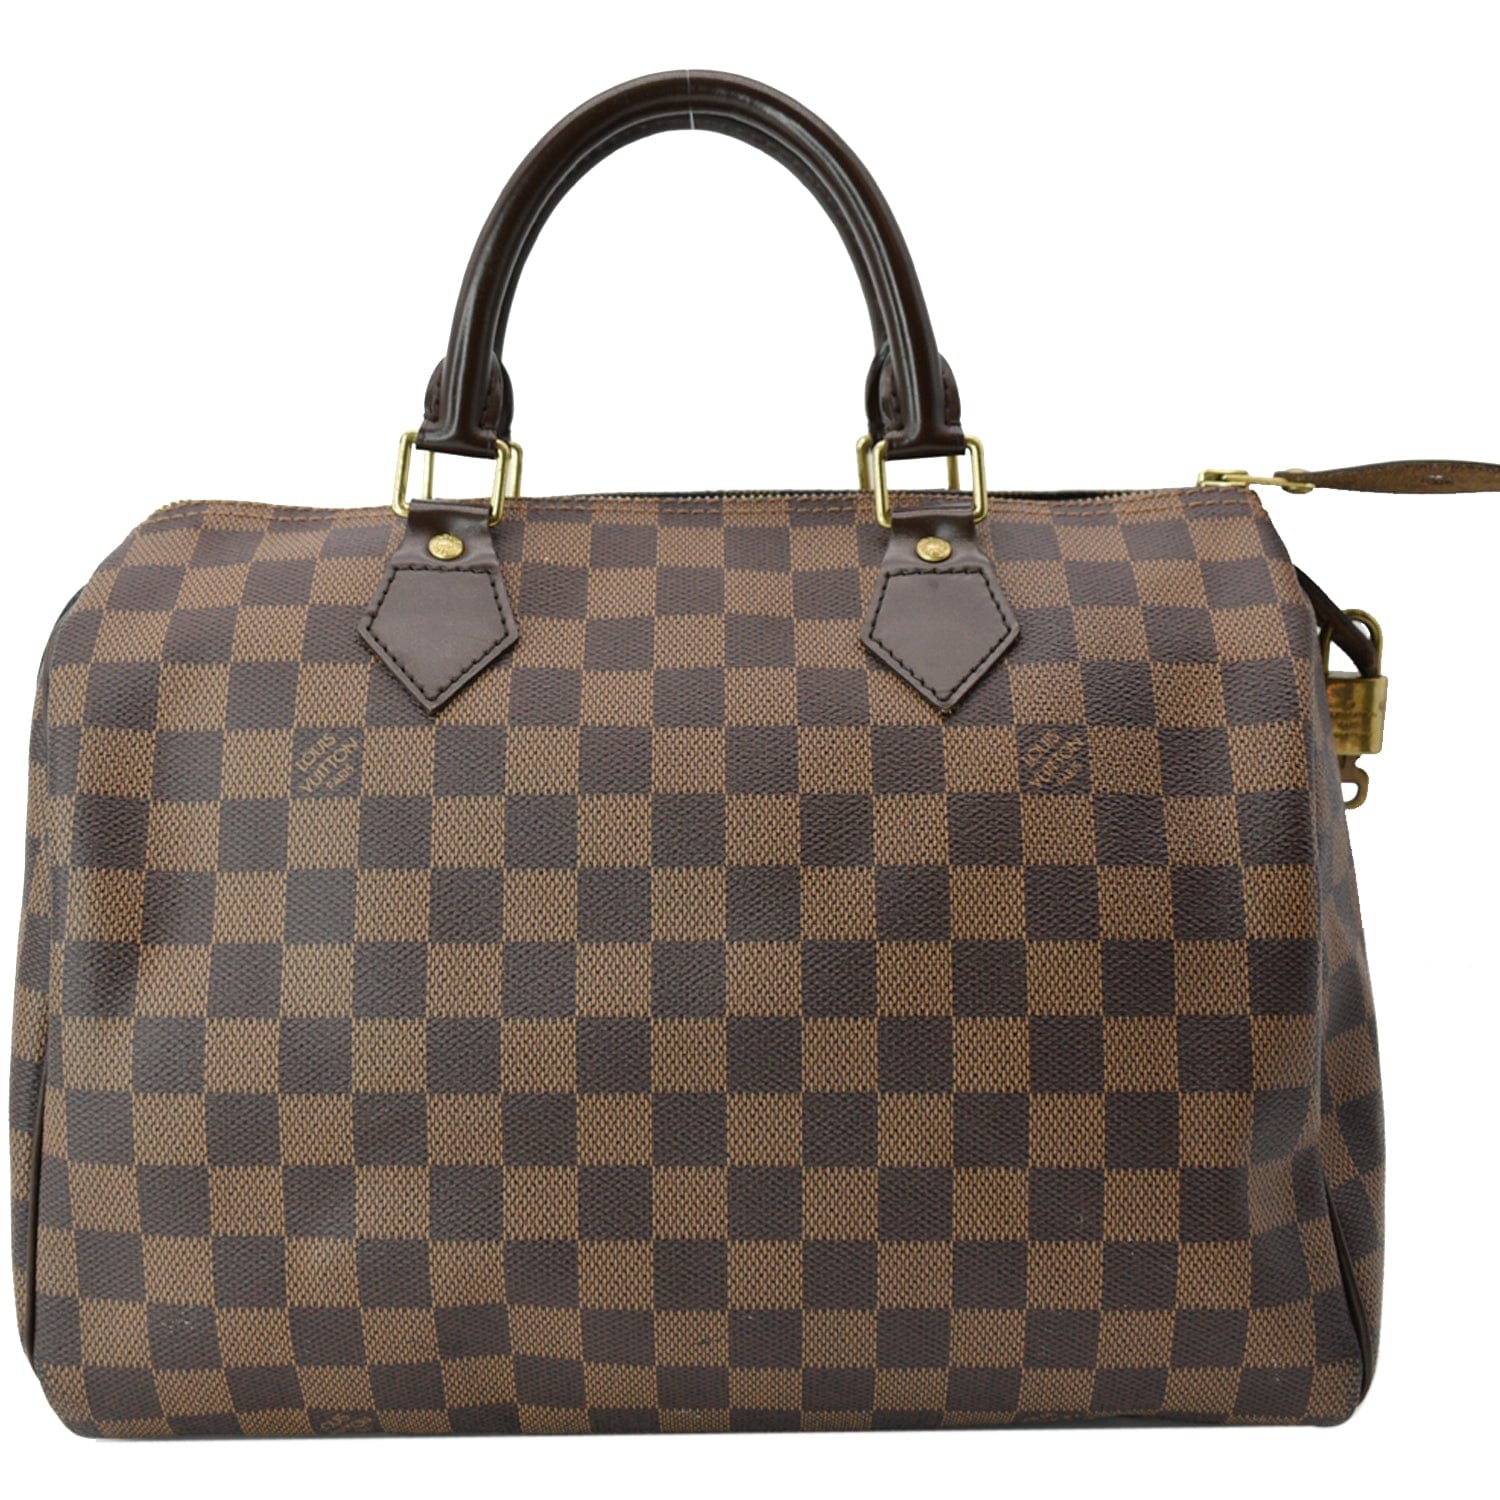 Louis Vuitton Speedy 30 Damier Ebene Bag Review 